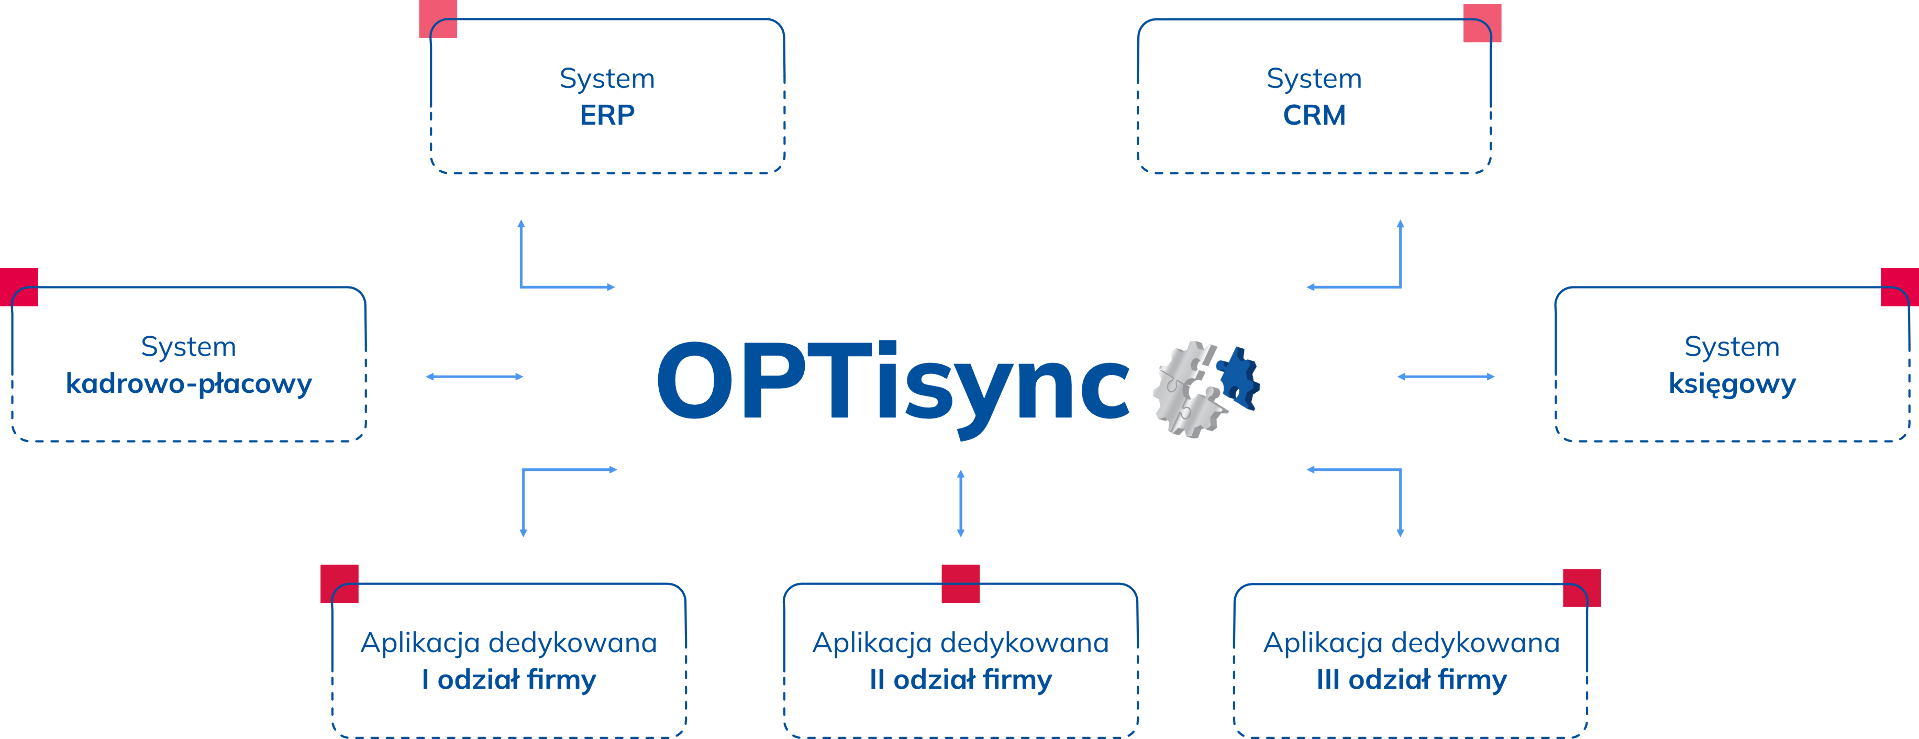 optisync_szyna_danych_integracja_systemow_opteam.png